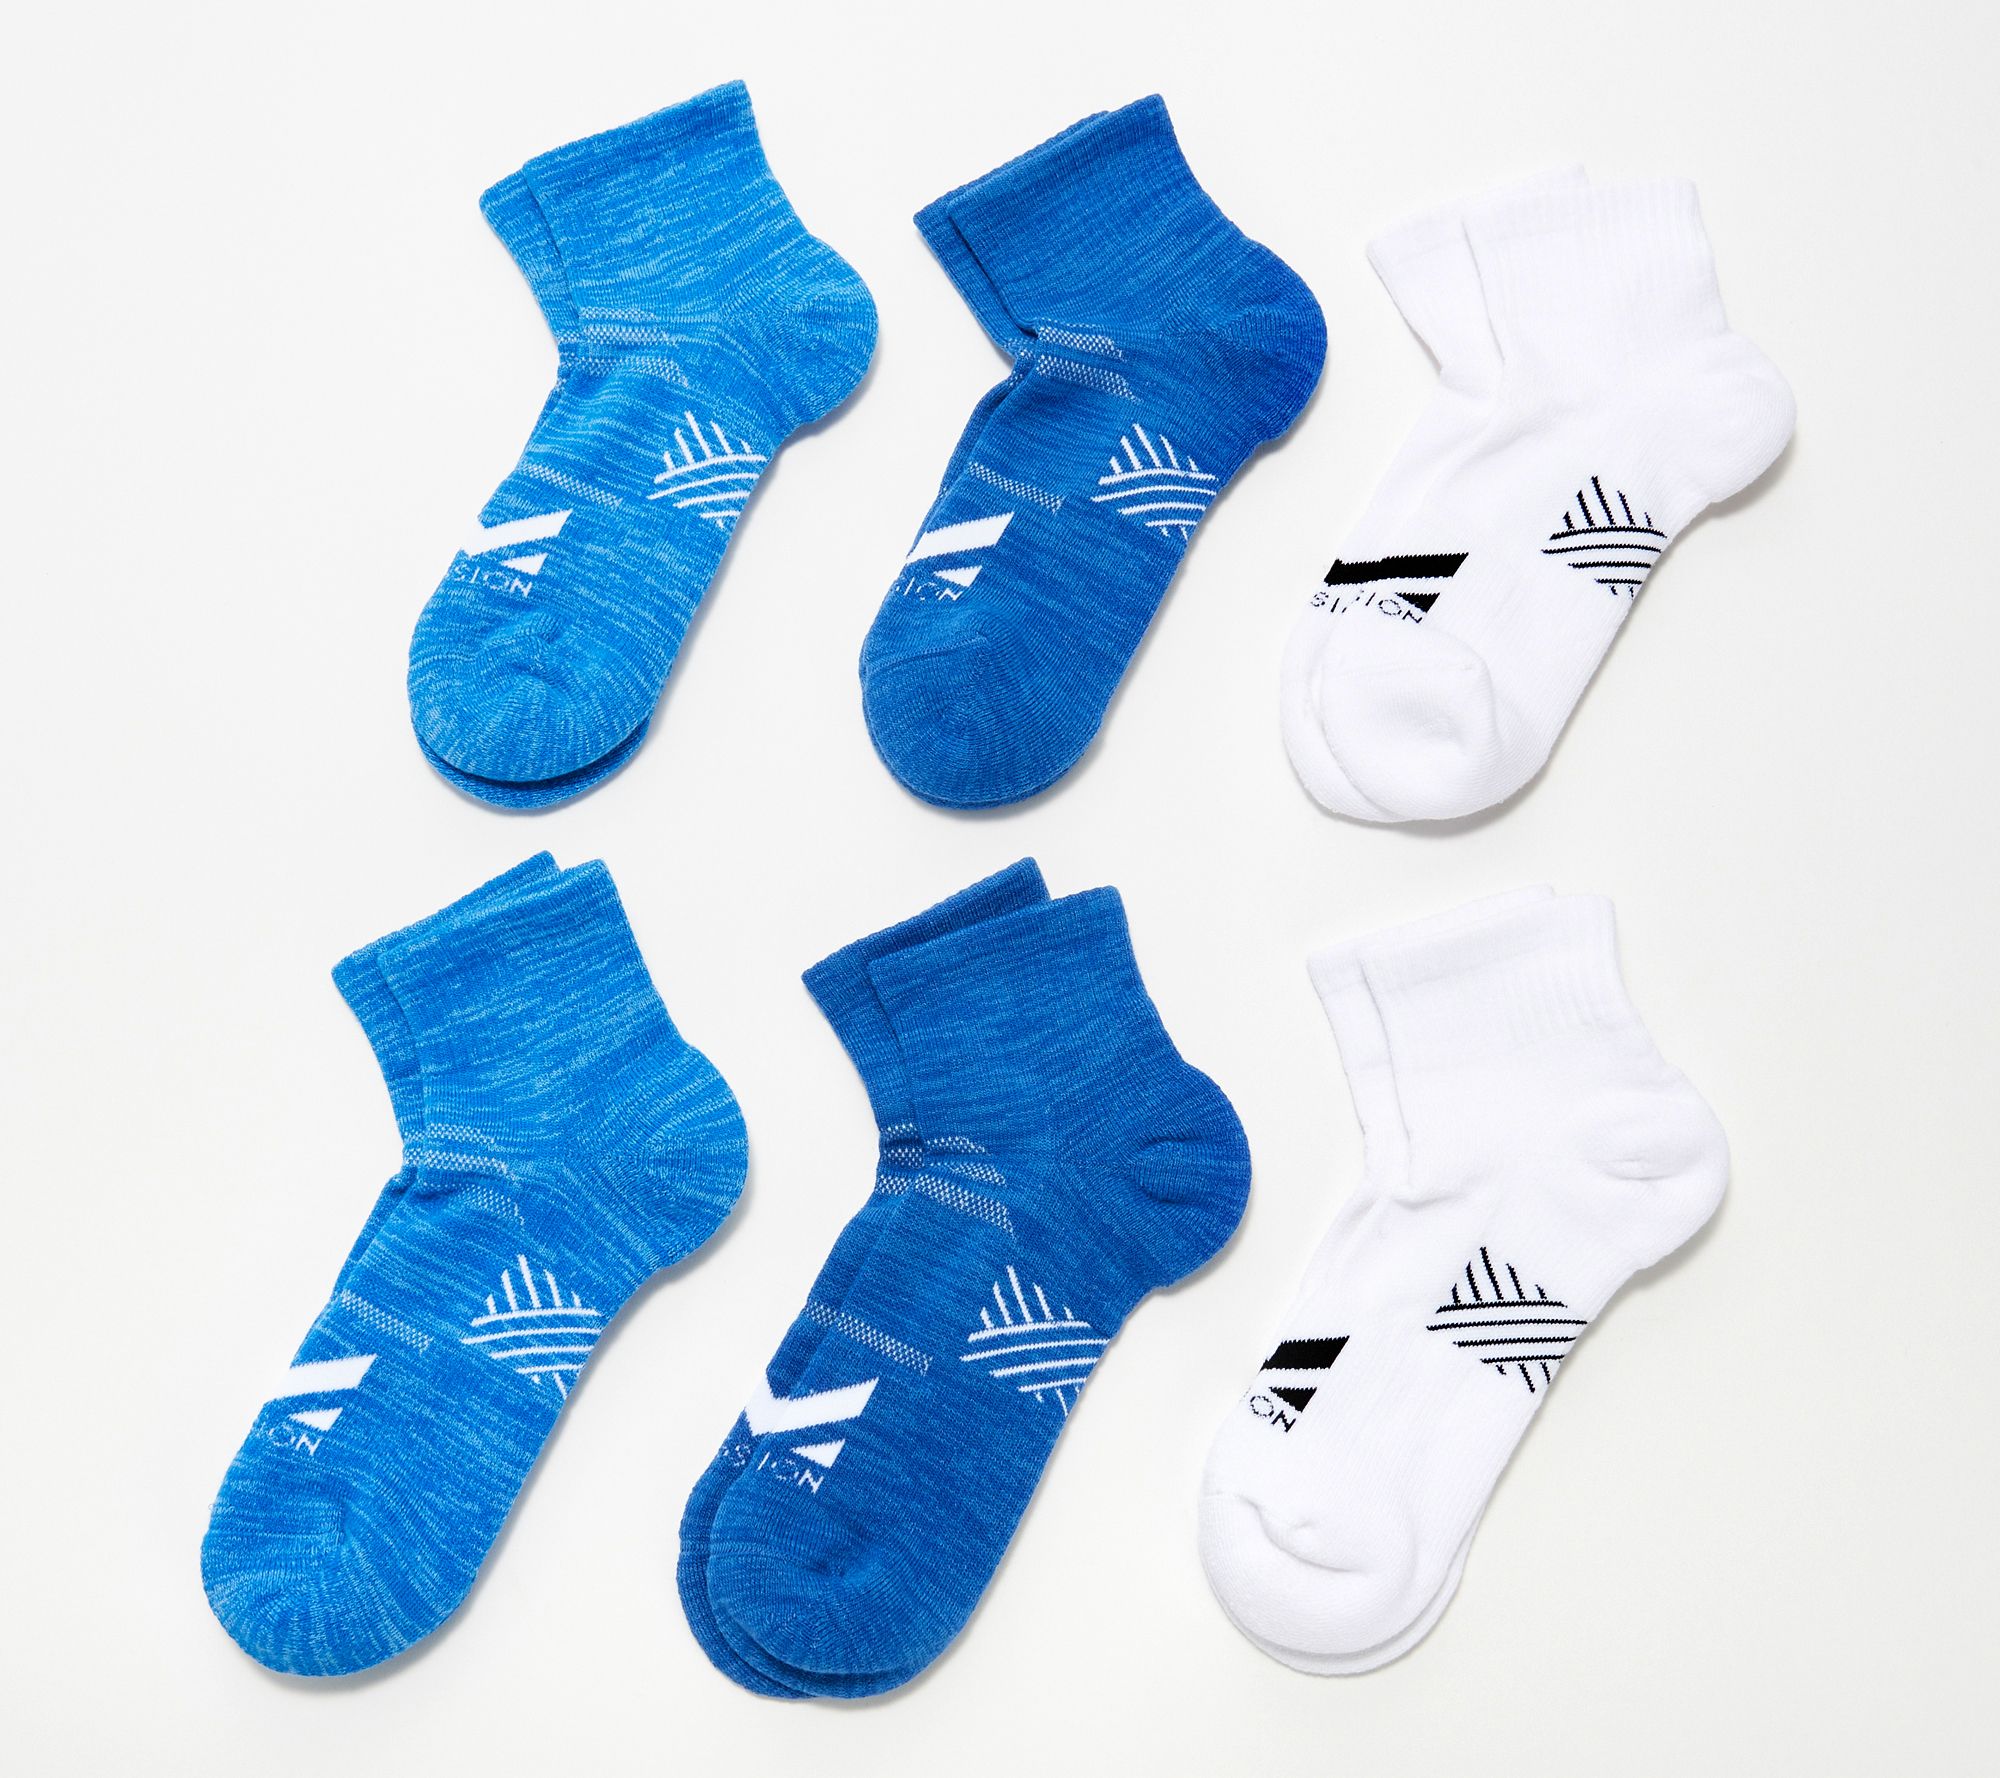 Mission Set of 6 Dry & Cool Pinnacle Ankle Socks - QVC.com